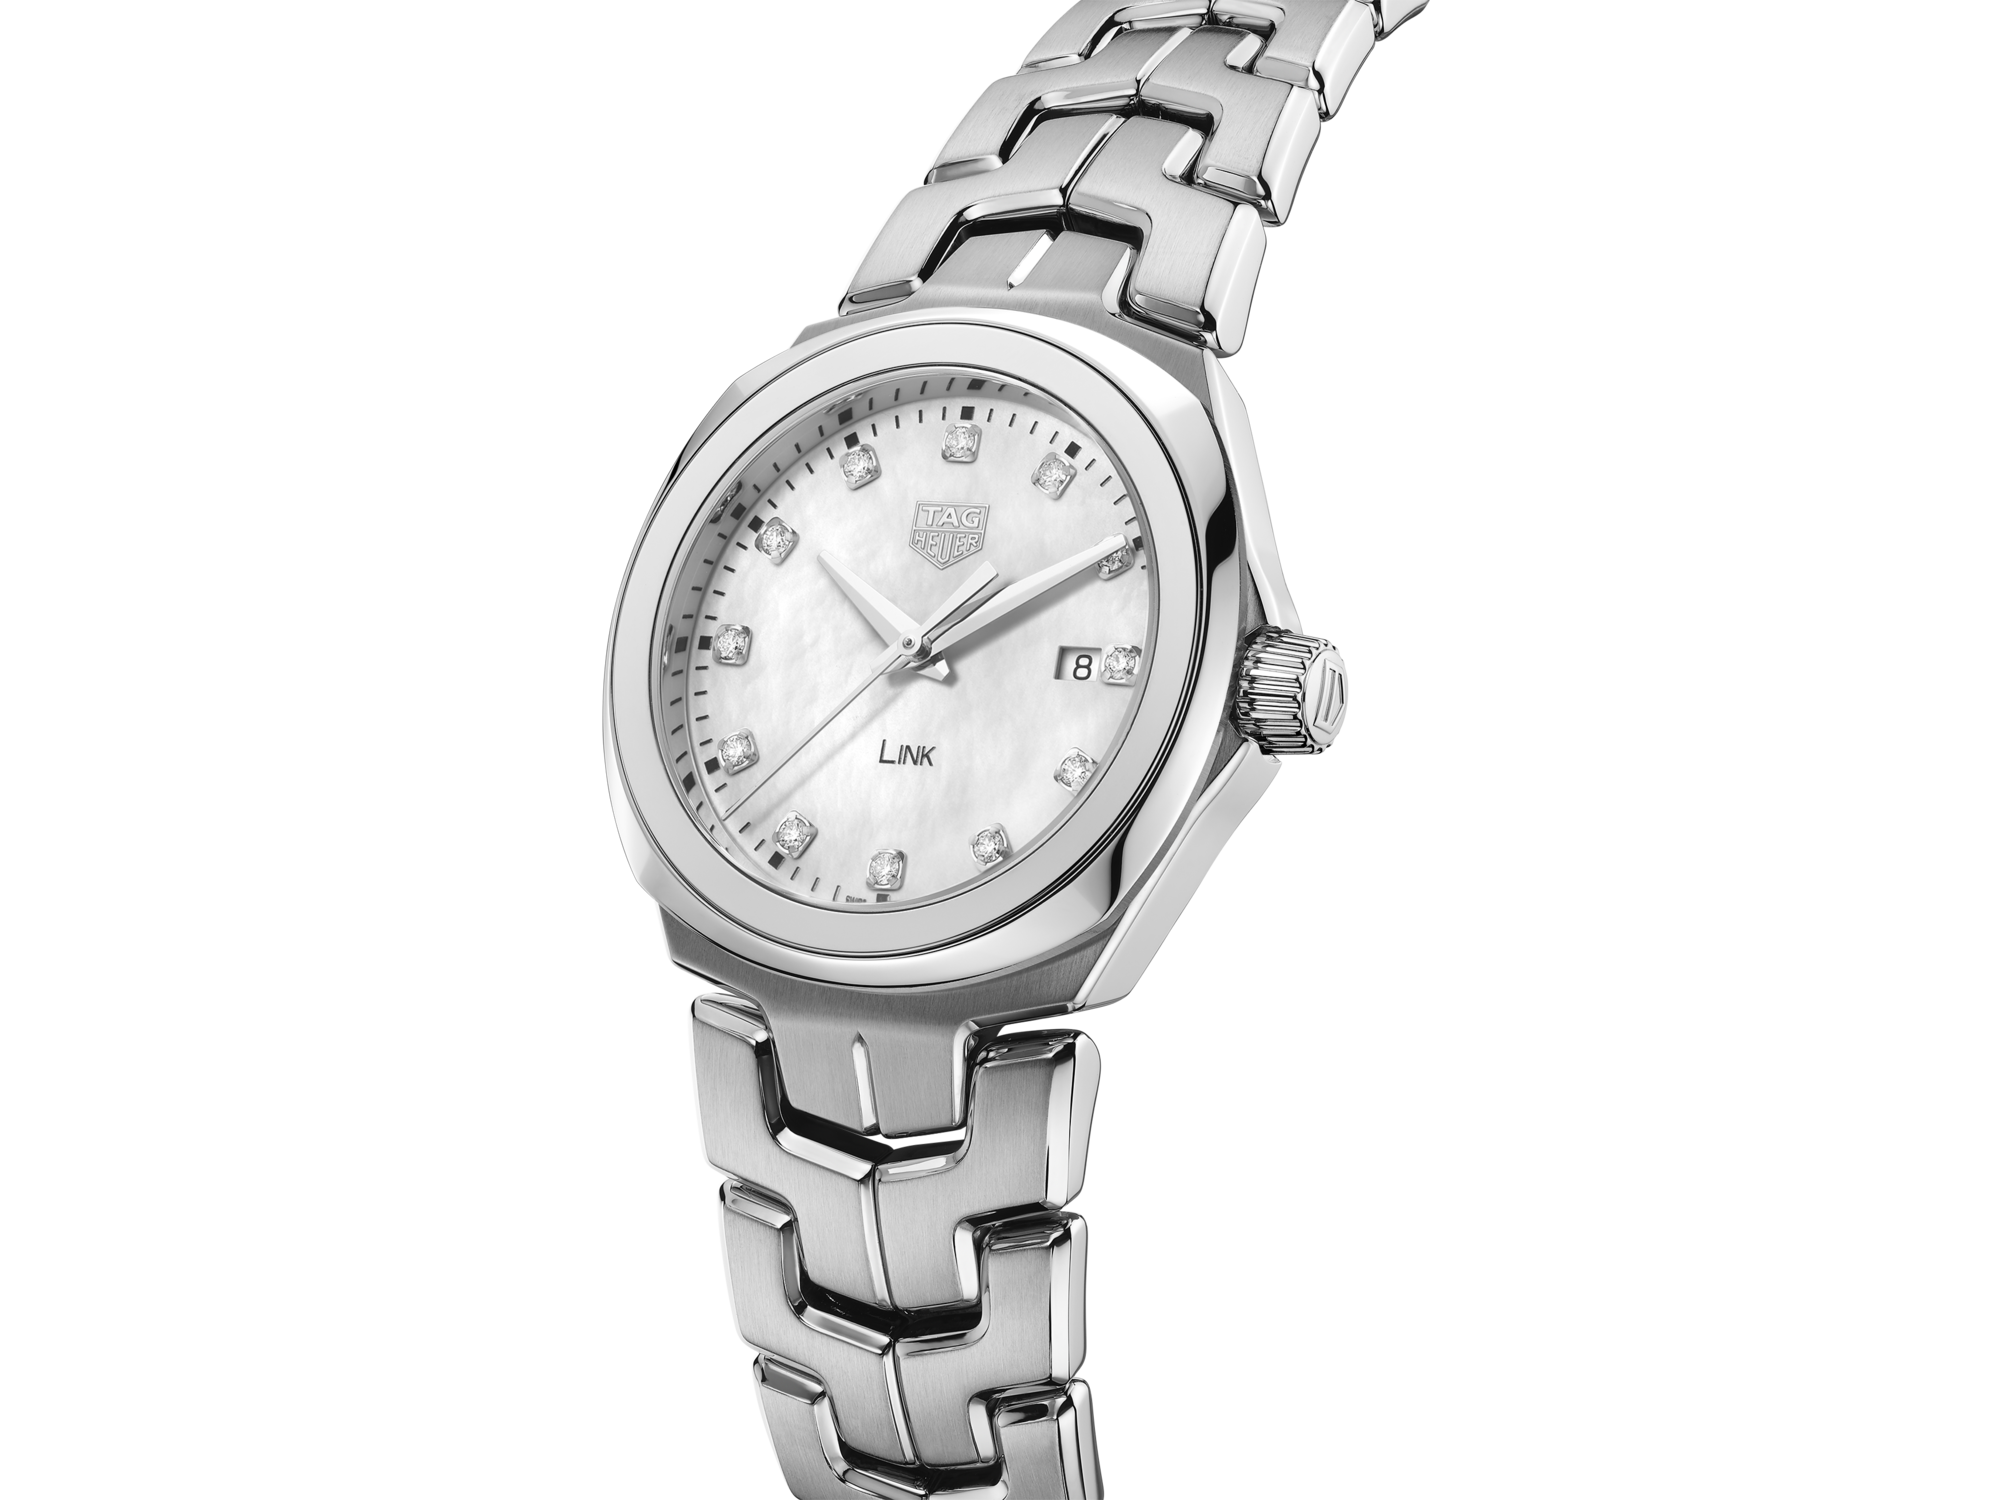 Tag Heuer Women's Link Diamond Stainless Steel Watch